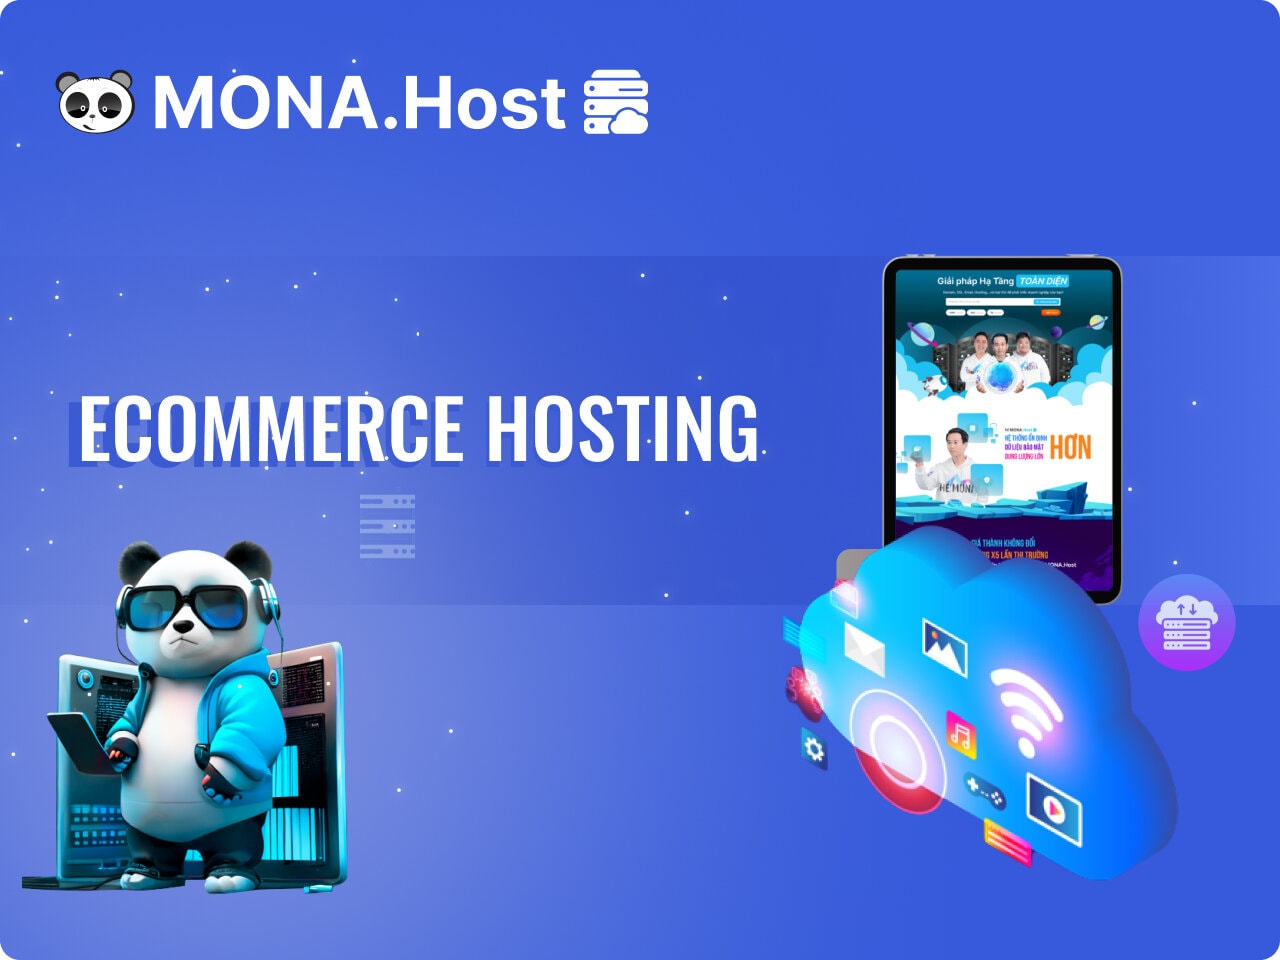 ecommerce hosting